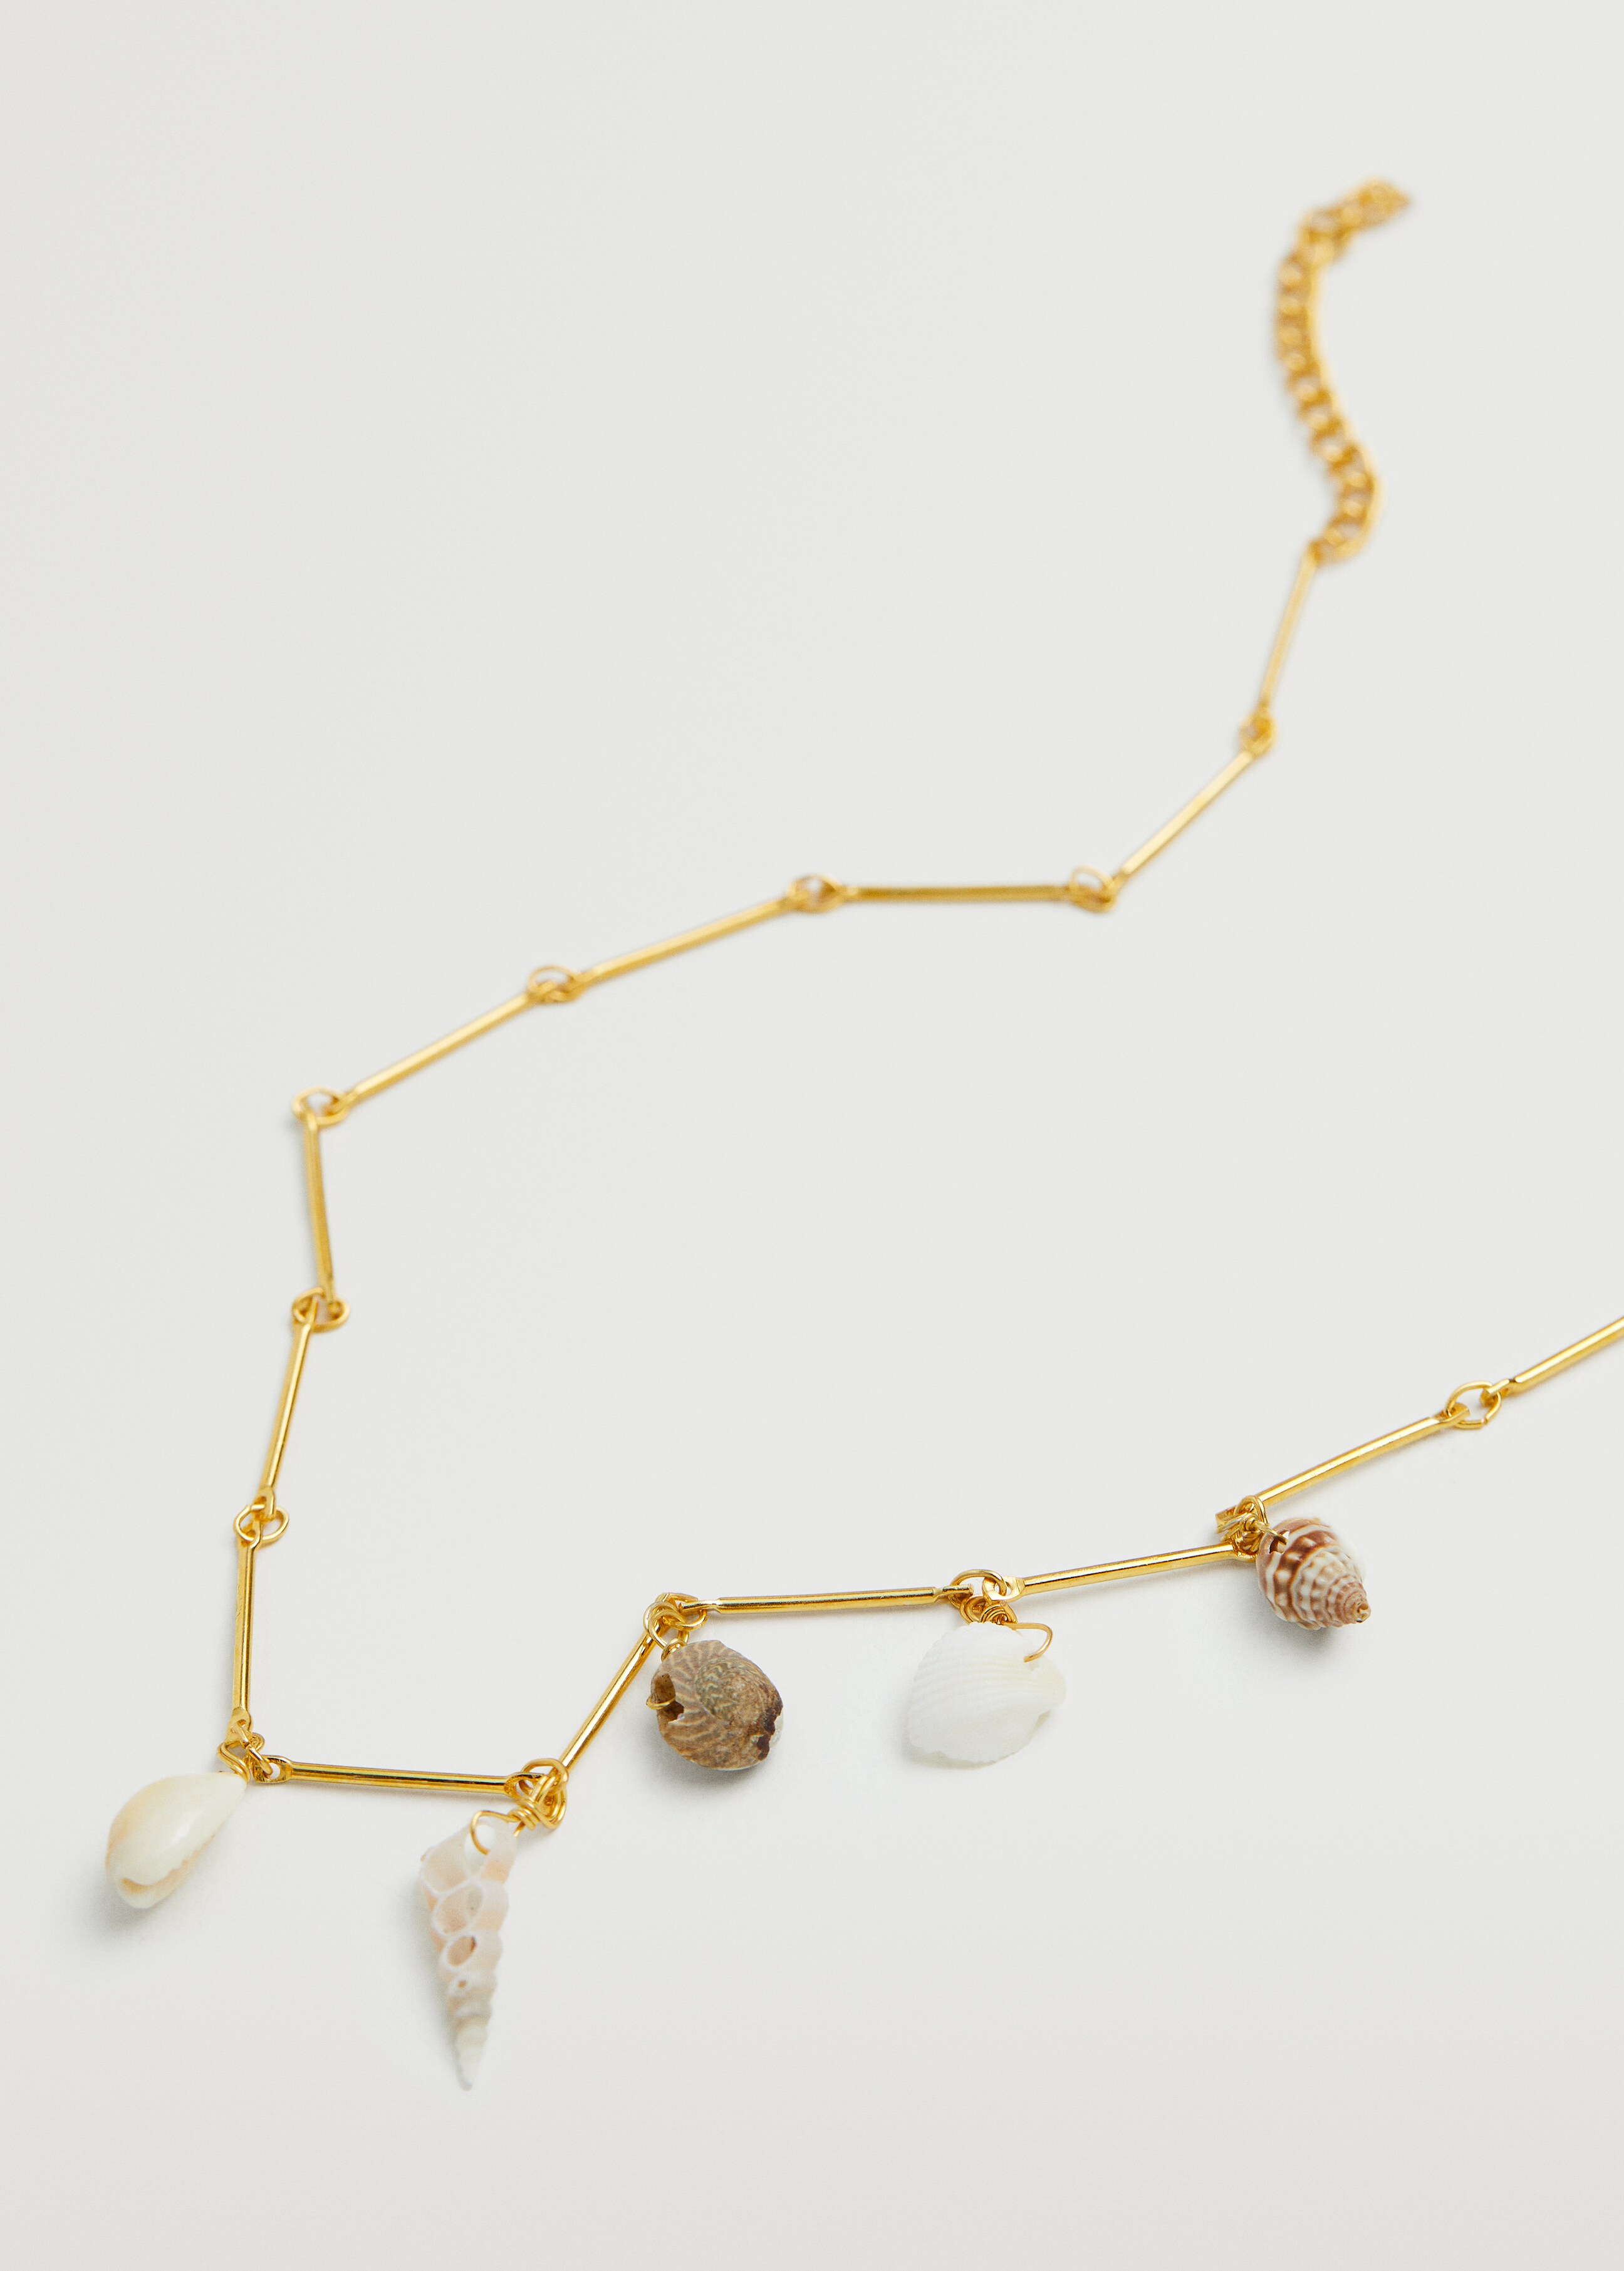 Shell bead necklace - Medium plane